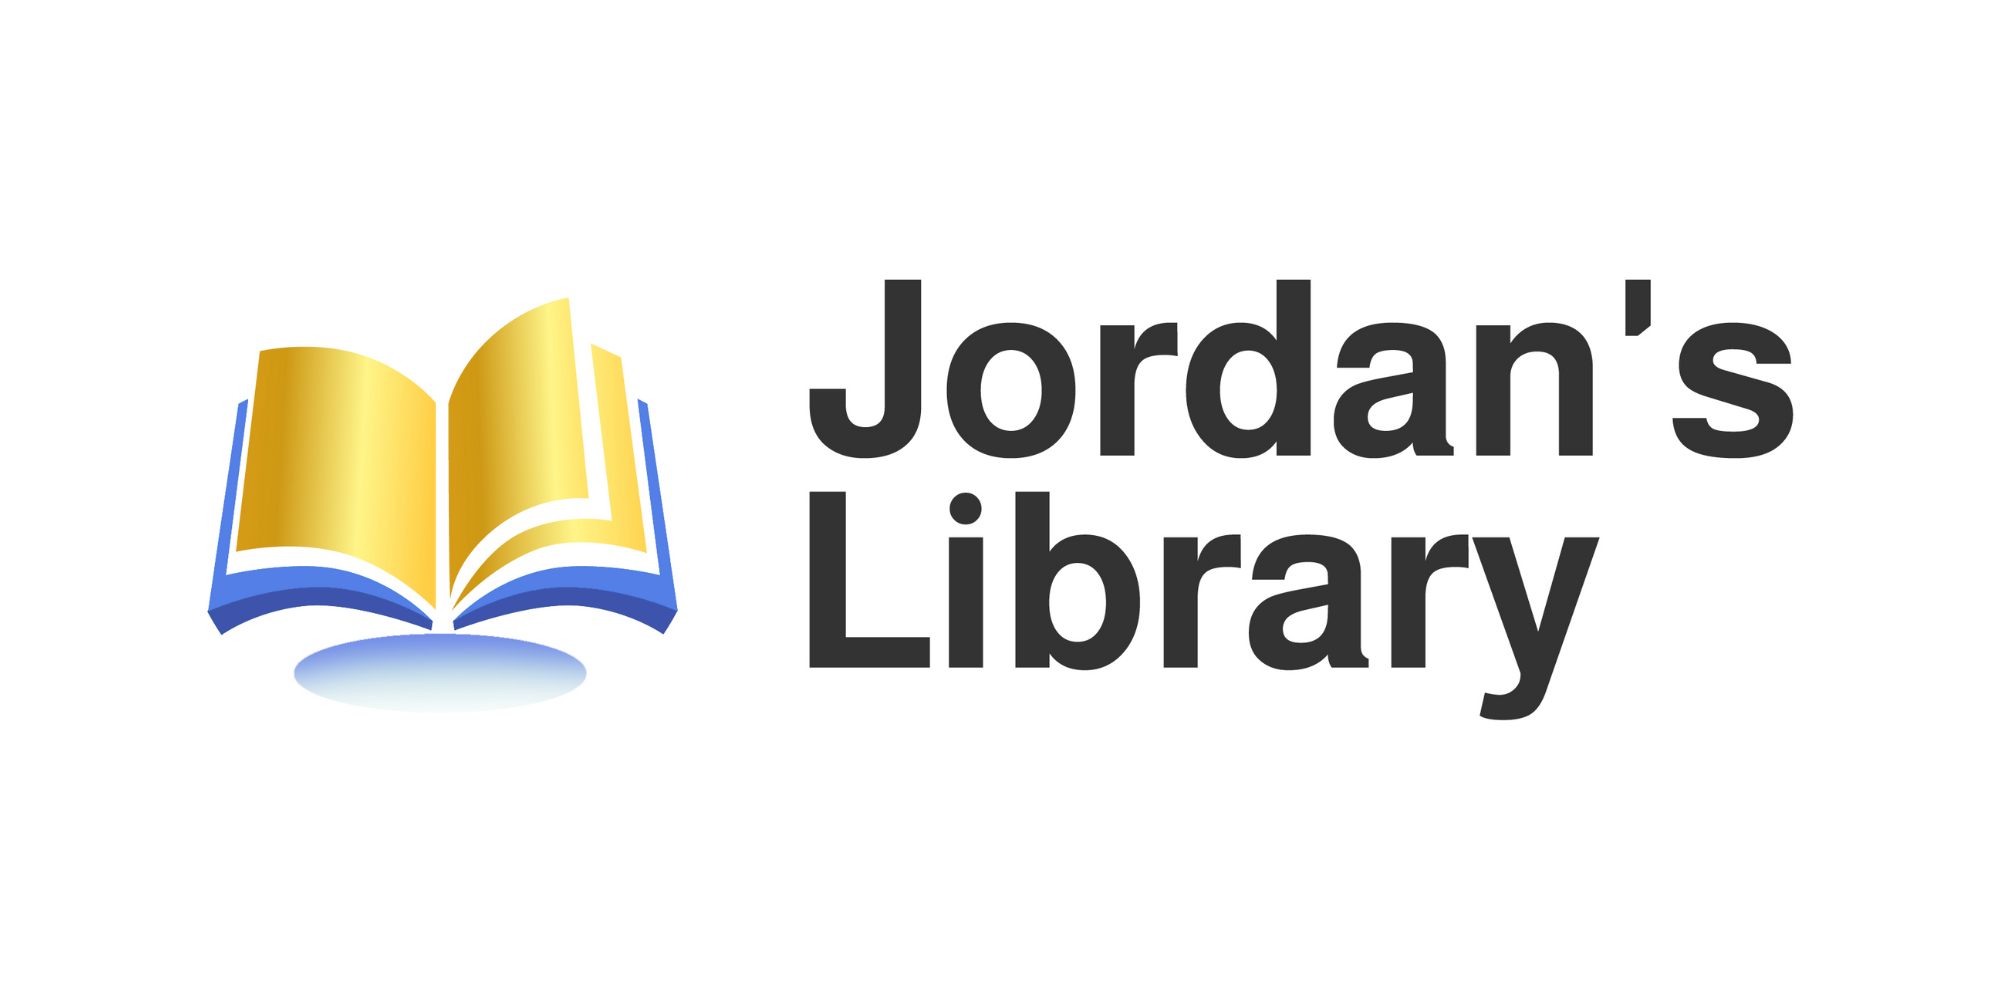 Jordan's Library